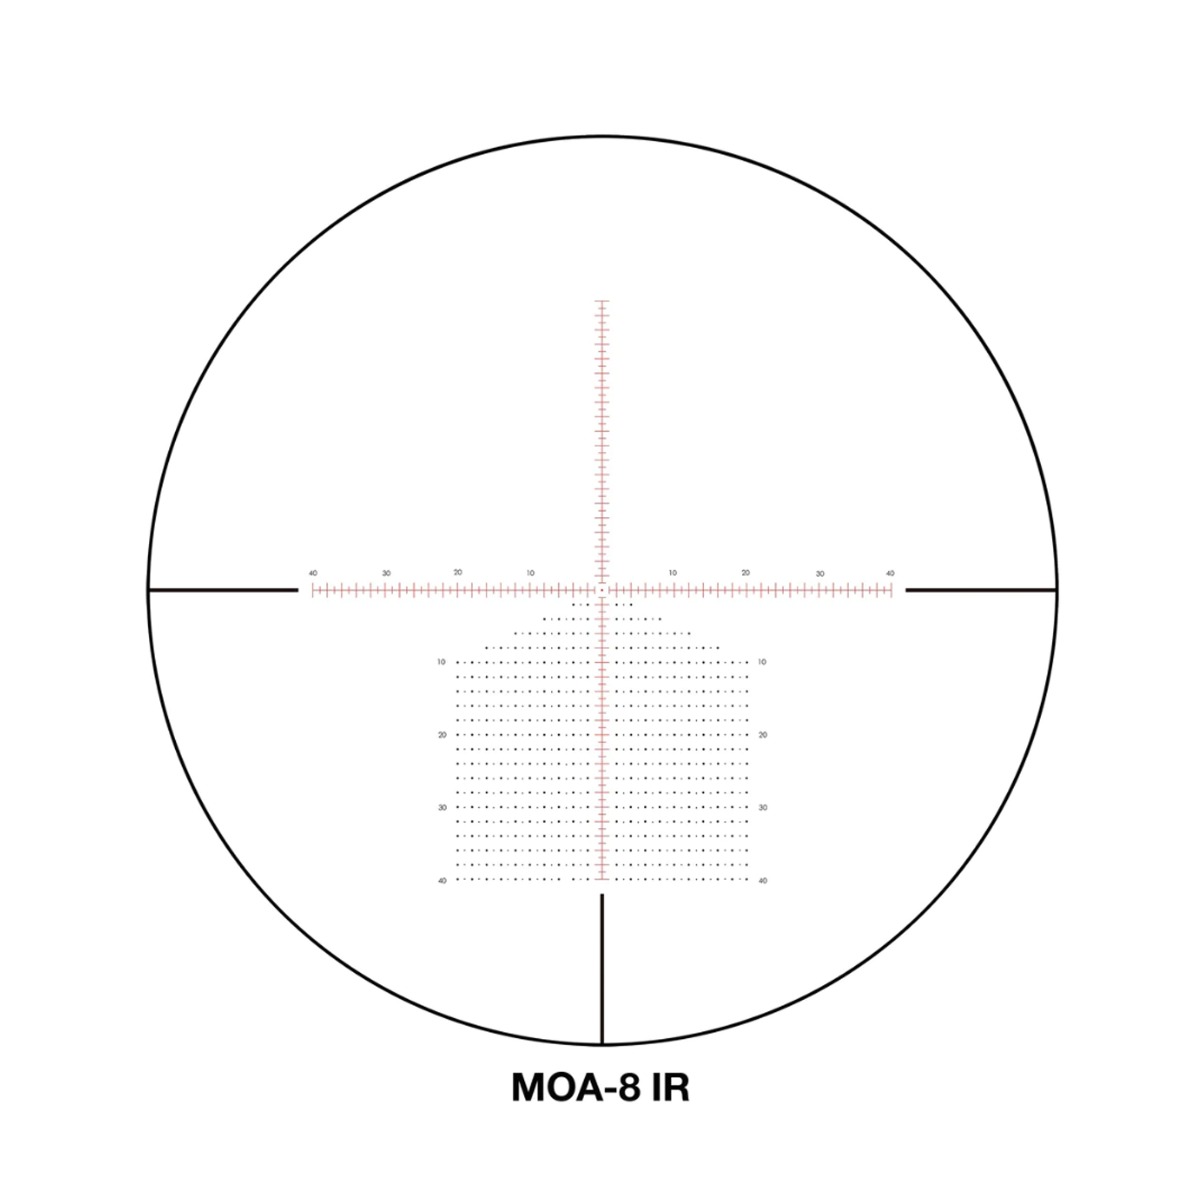 MOA-8 Reticle